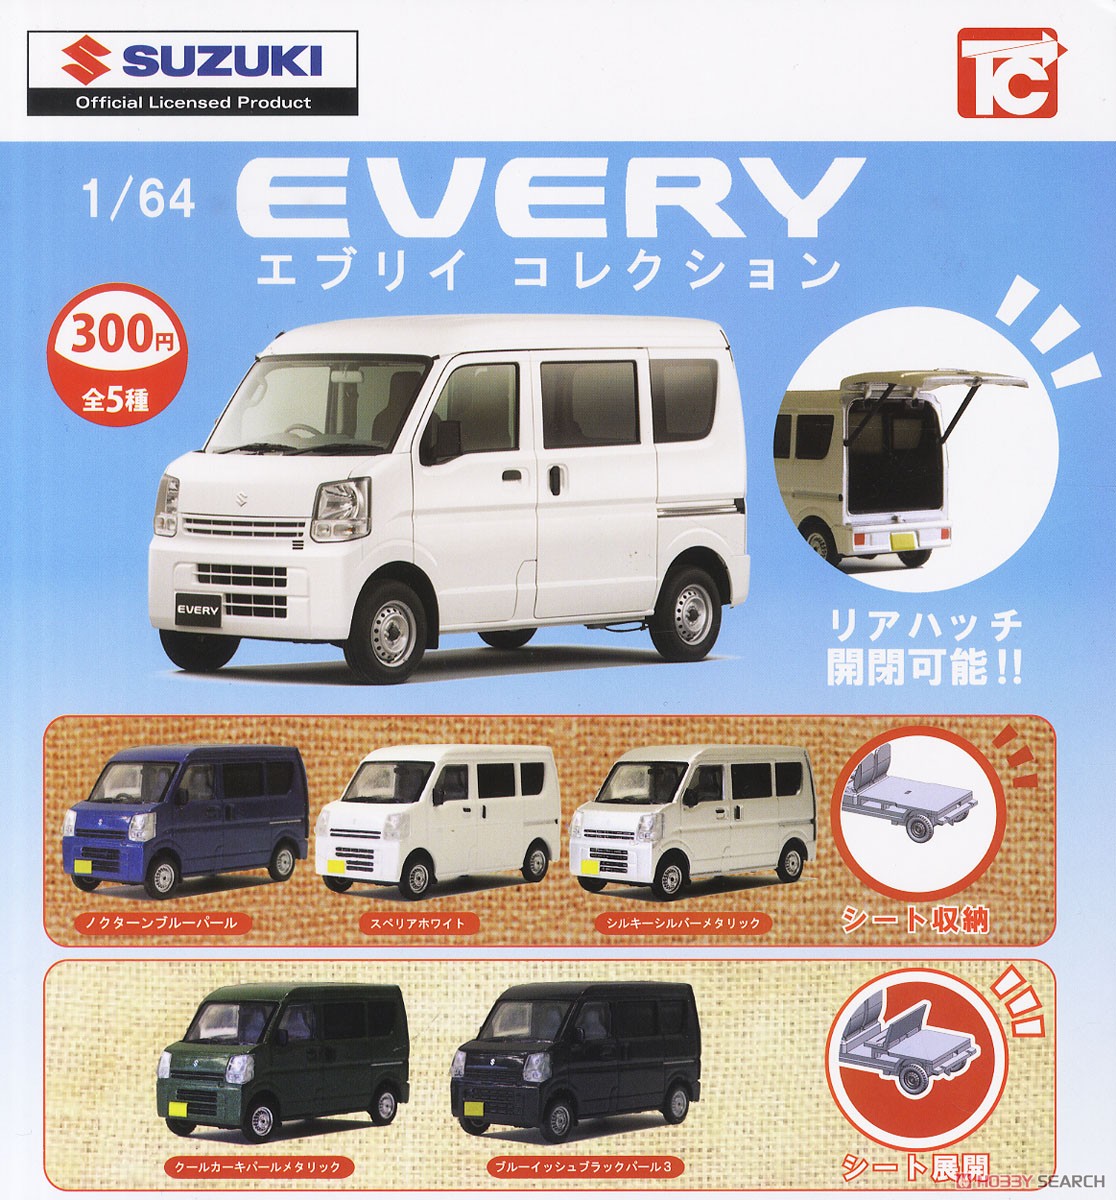 1/64 Suzuki Every Cool khaki pearl metallic (Toy) Other picture1